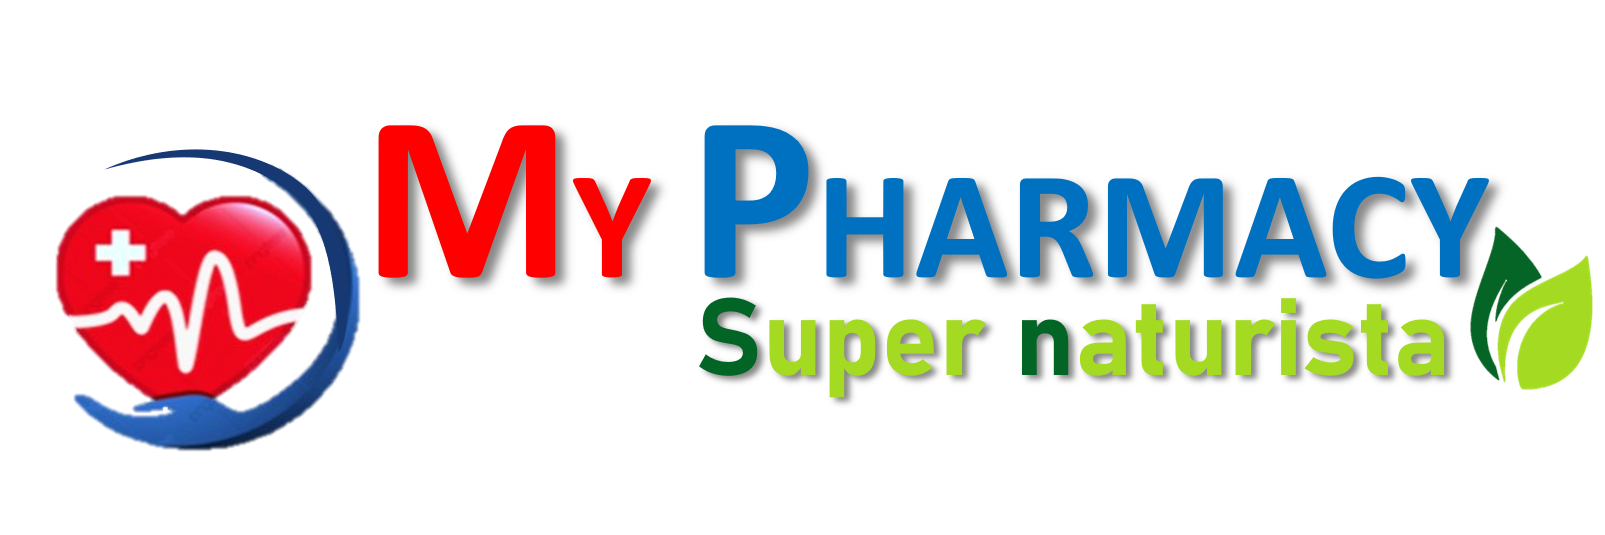 My Pharmacy Super Naturista